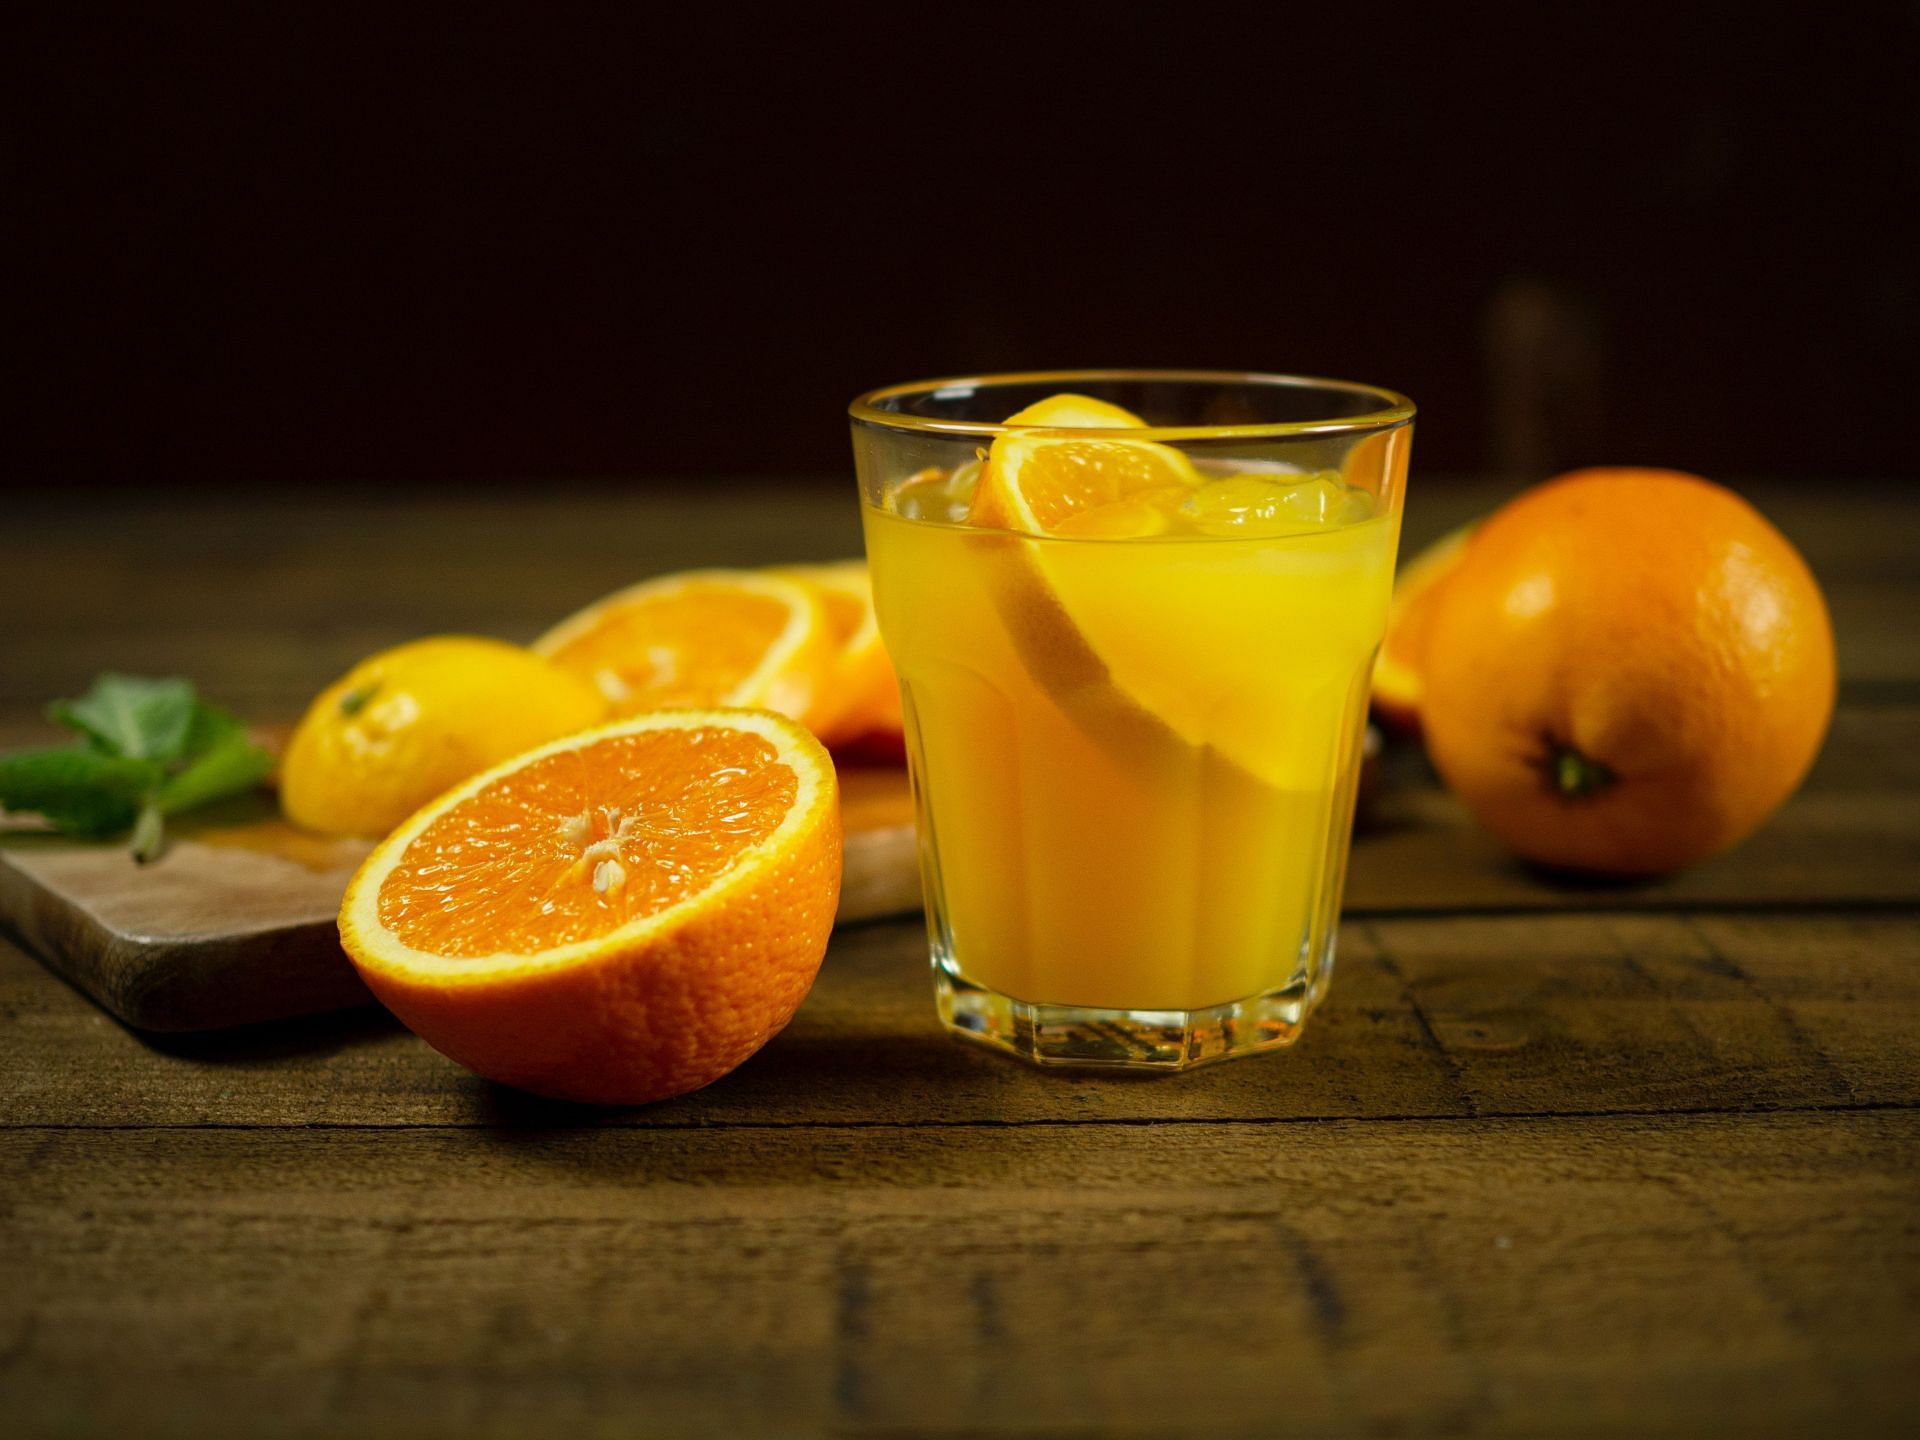 Health benefits of nutrients in orange (Image via Unsplash/Mateusz Feliksik)